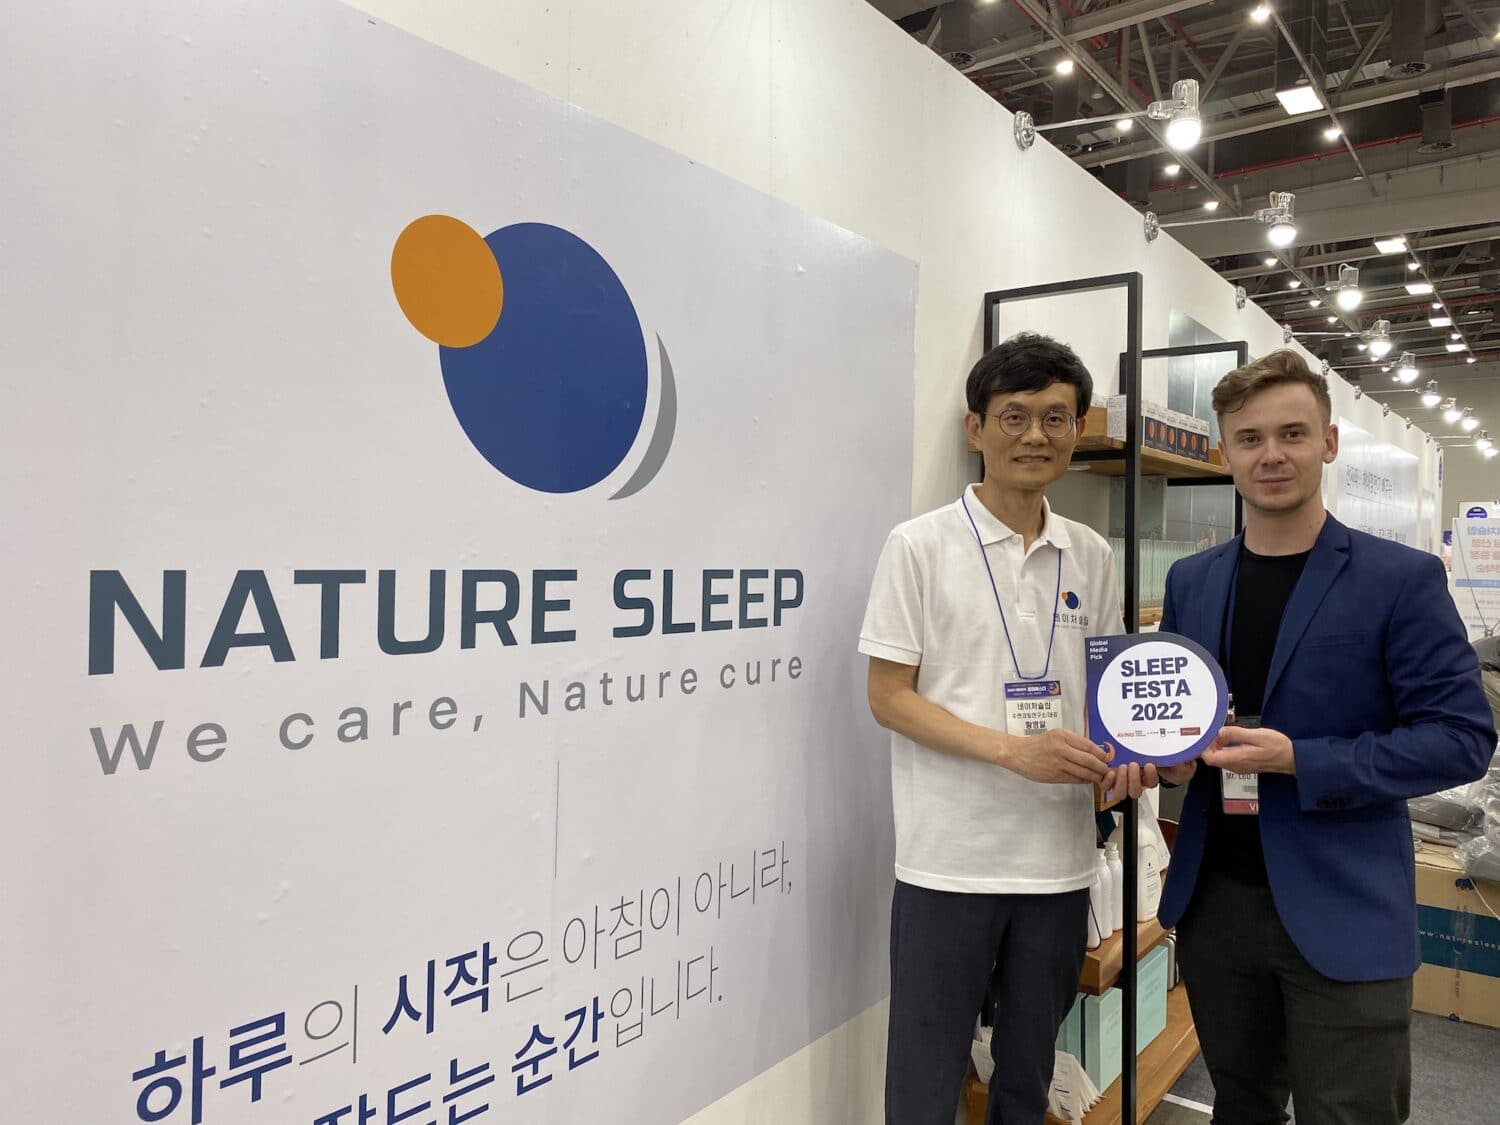 Nature Sleep – Une literie fonctionnelle – Startup sleep festa